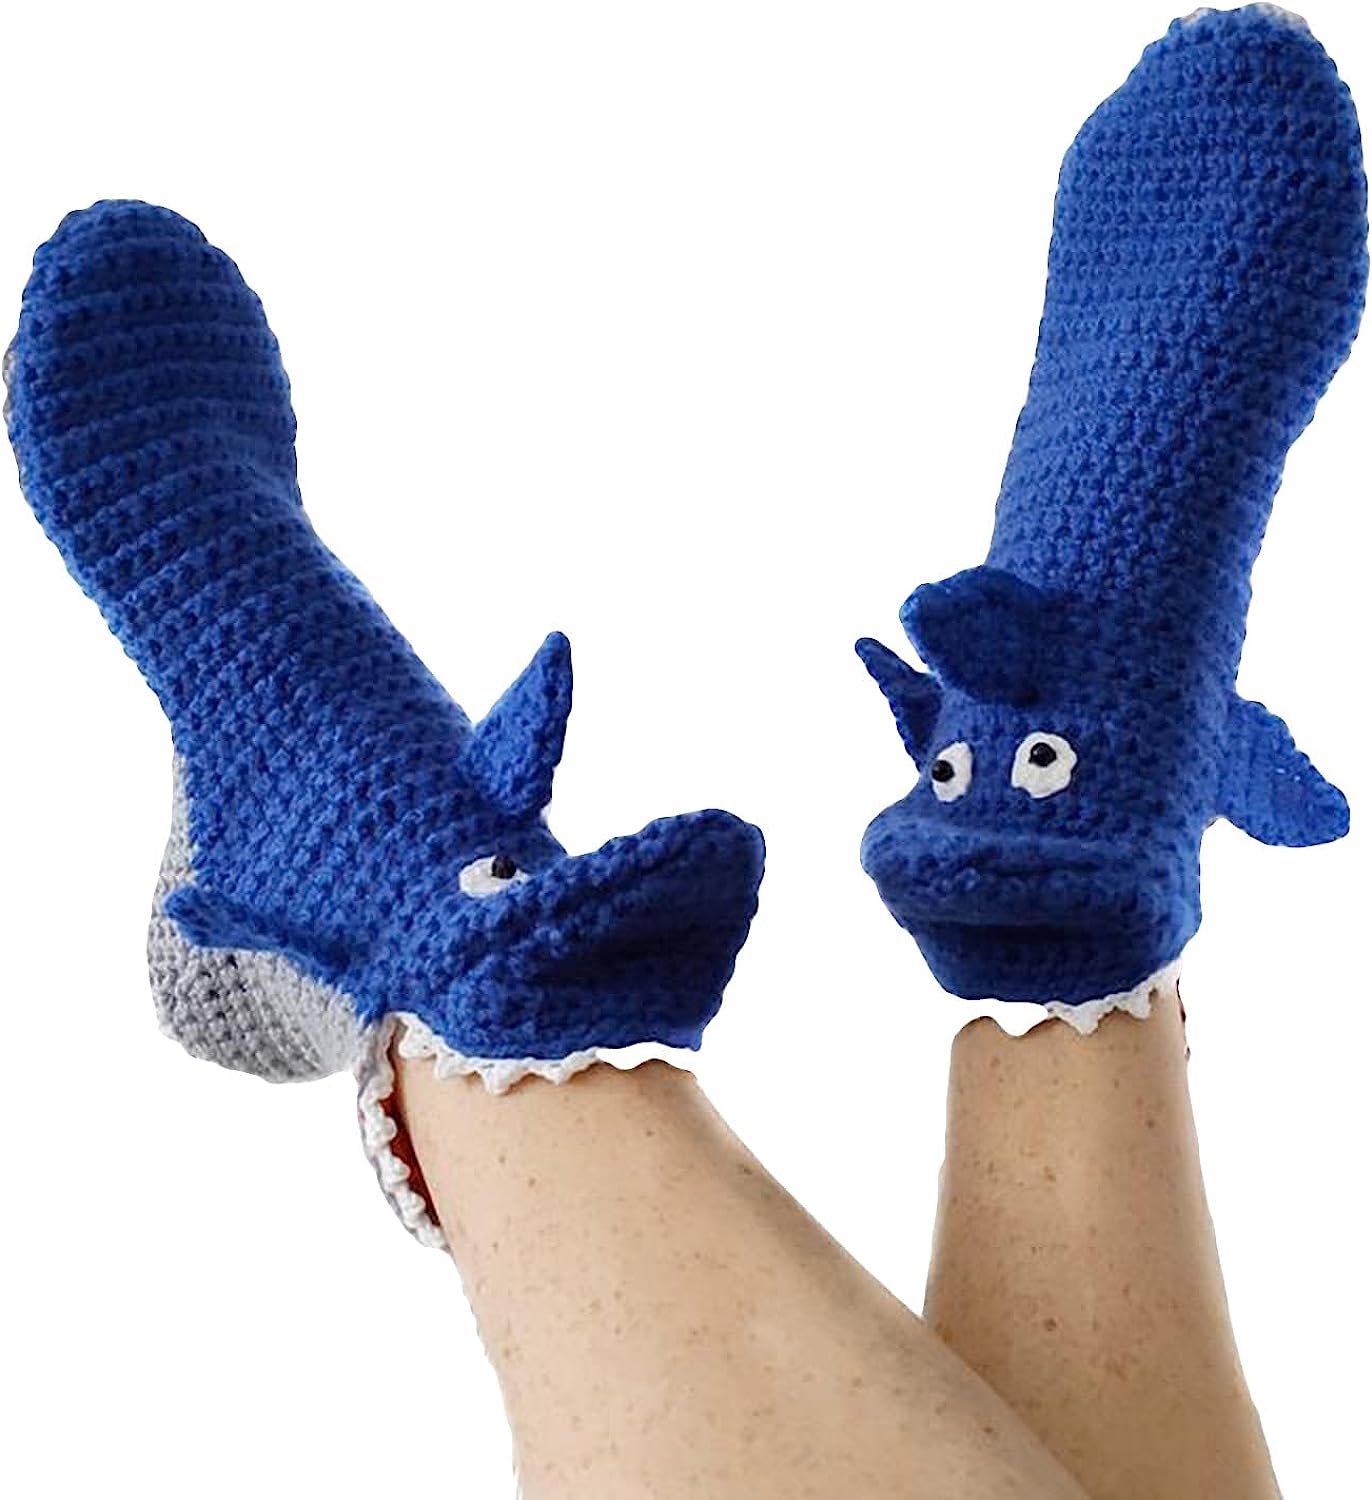 THATLILSHOP One Size / Shark Blue Women Men Novelty Animal Pattern Socks Crazy Funny Knit Crocodile Socks Funny Gifts